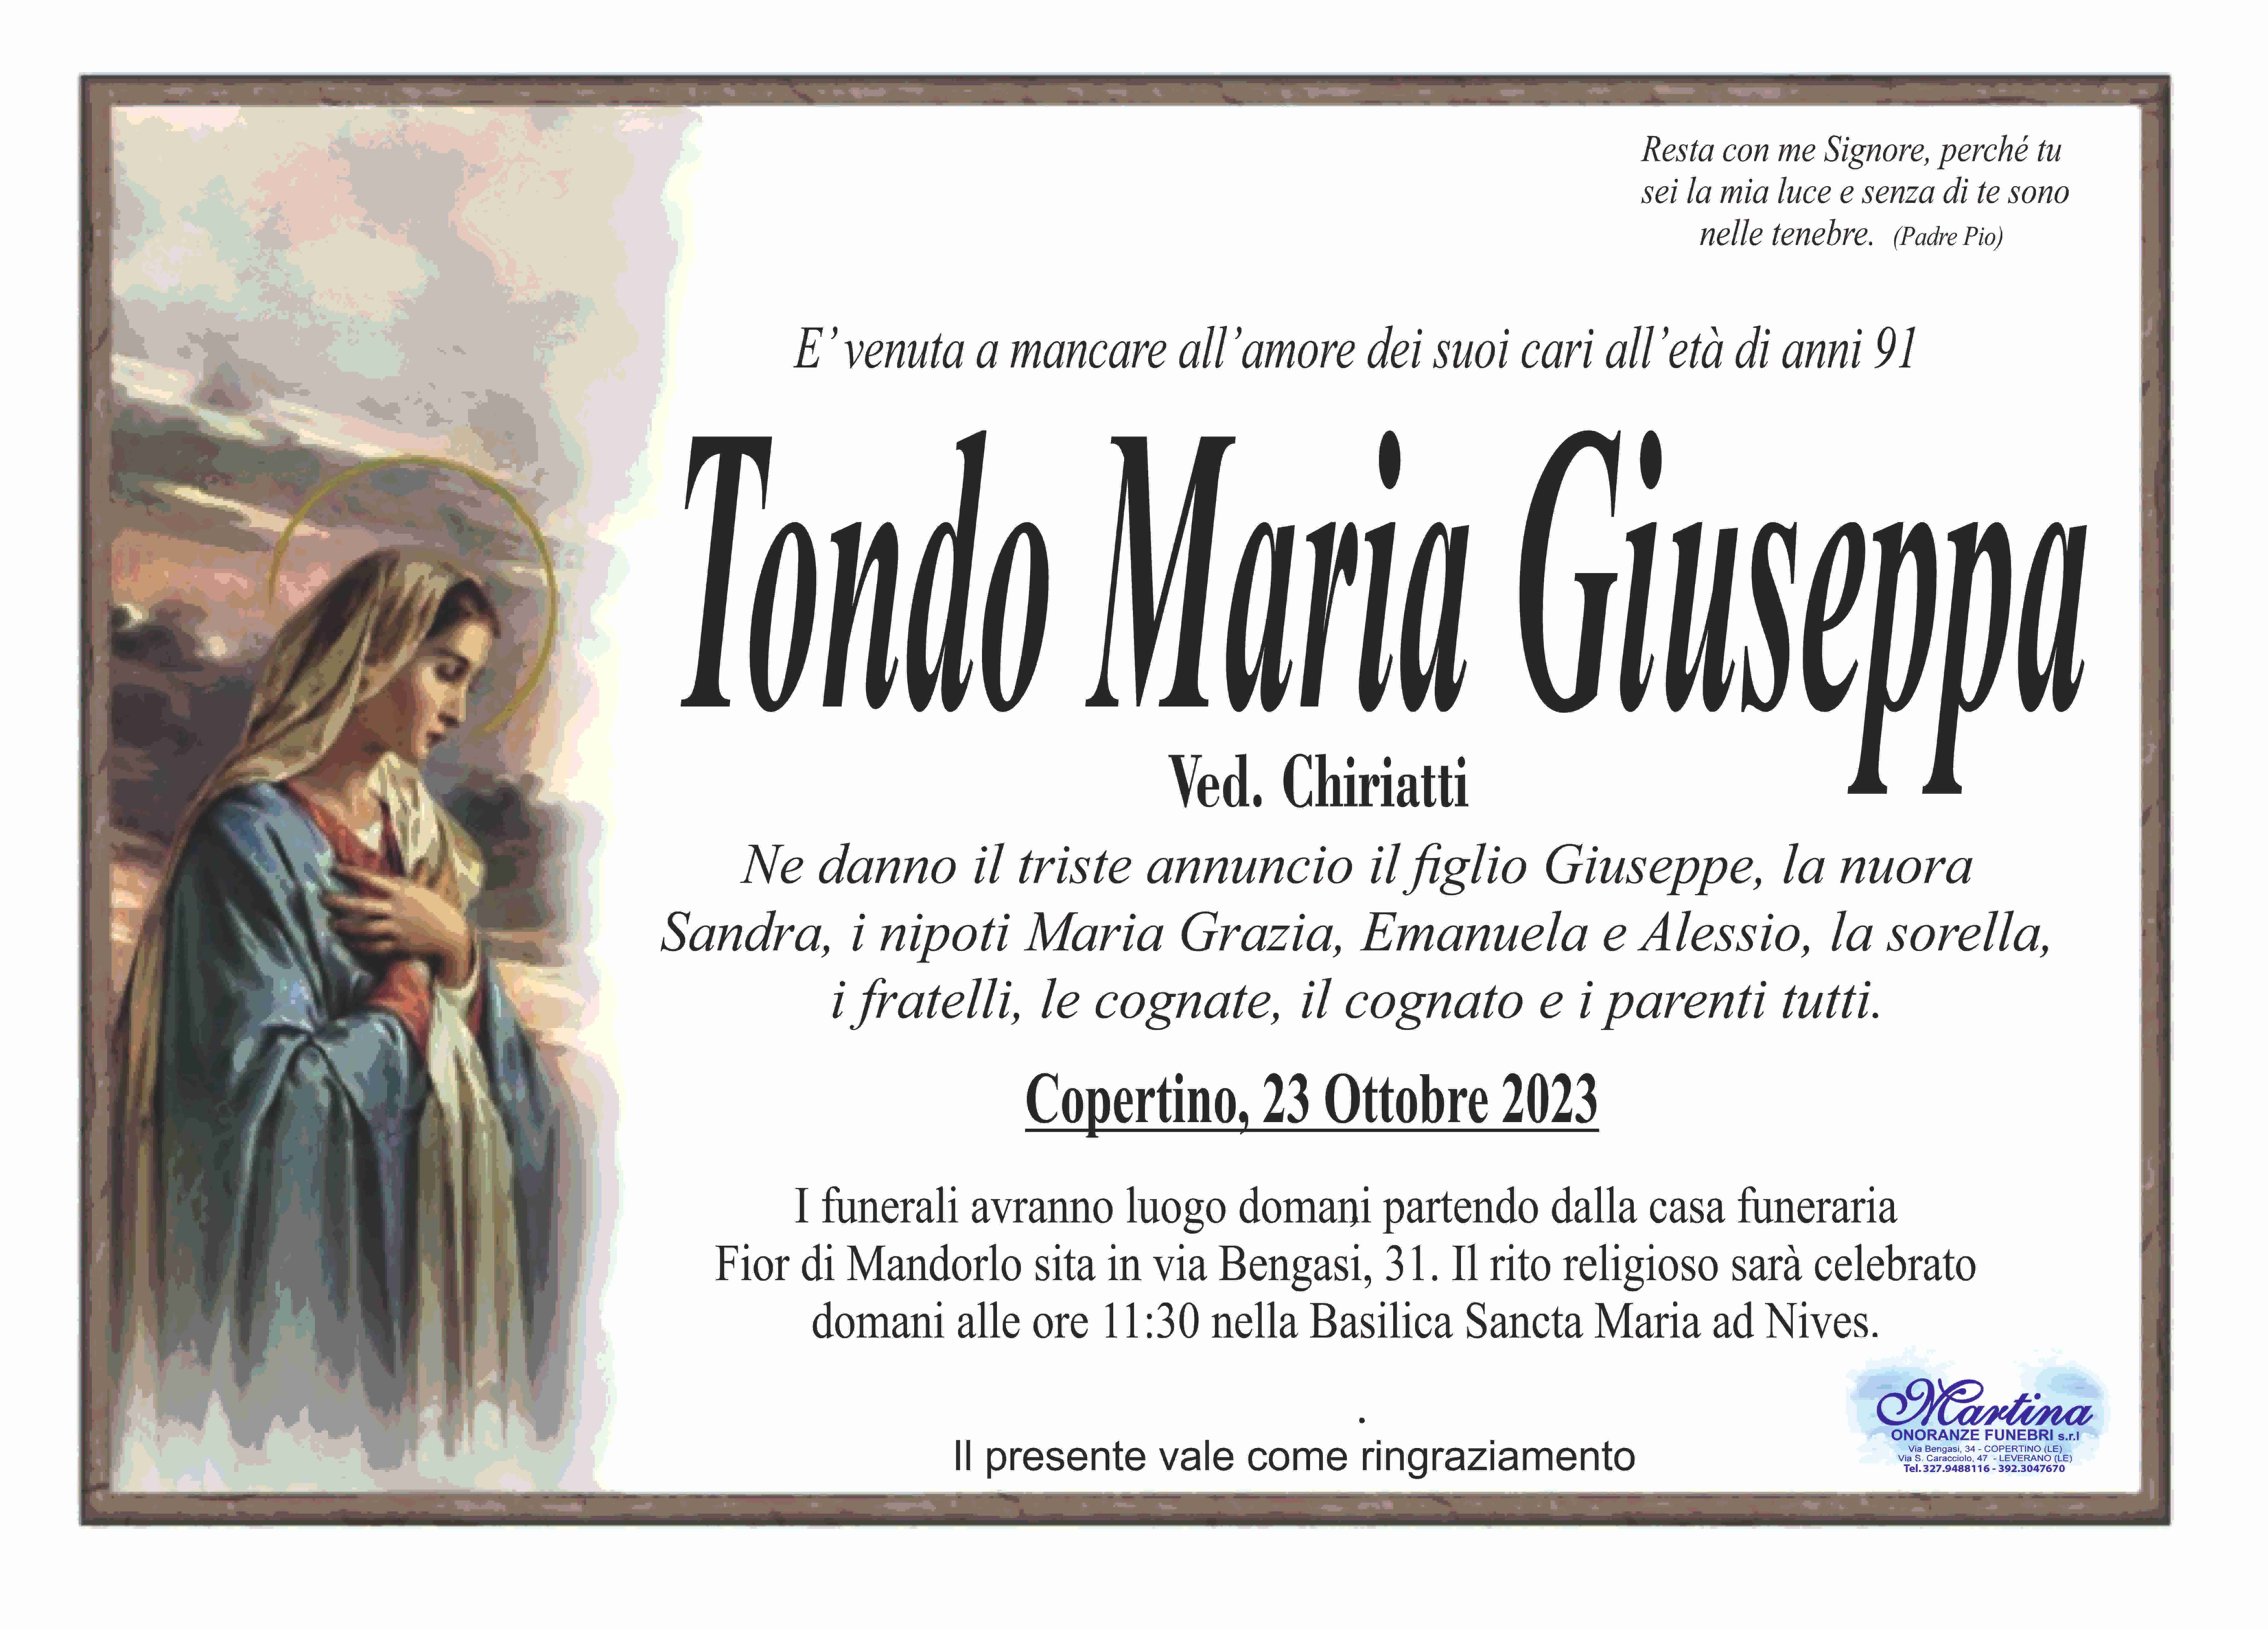 Maria Giuseppa Tondo